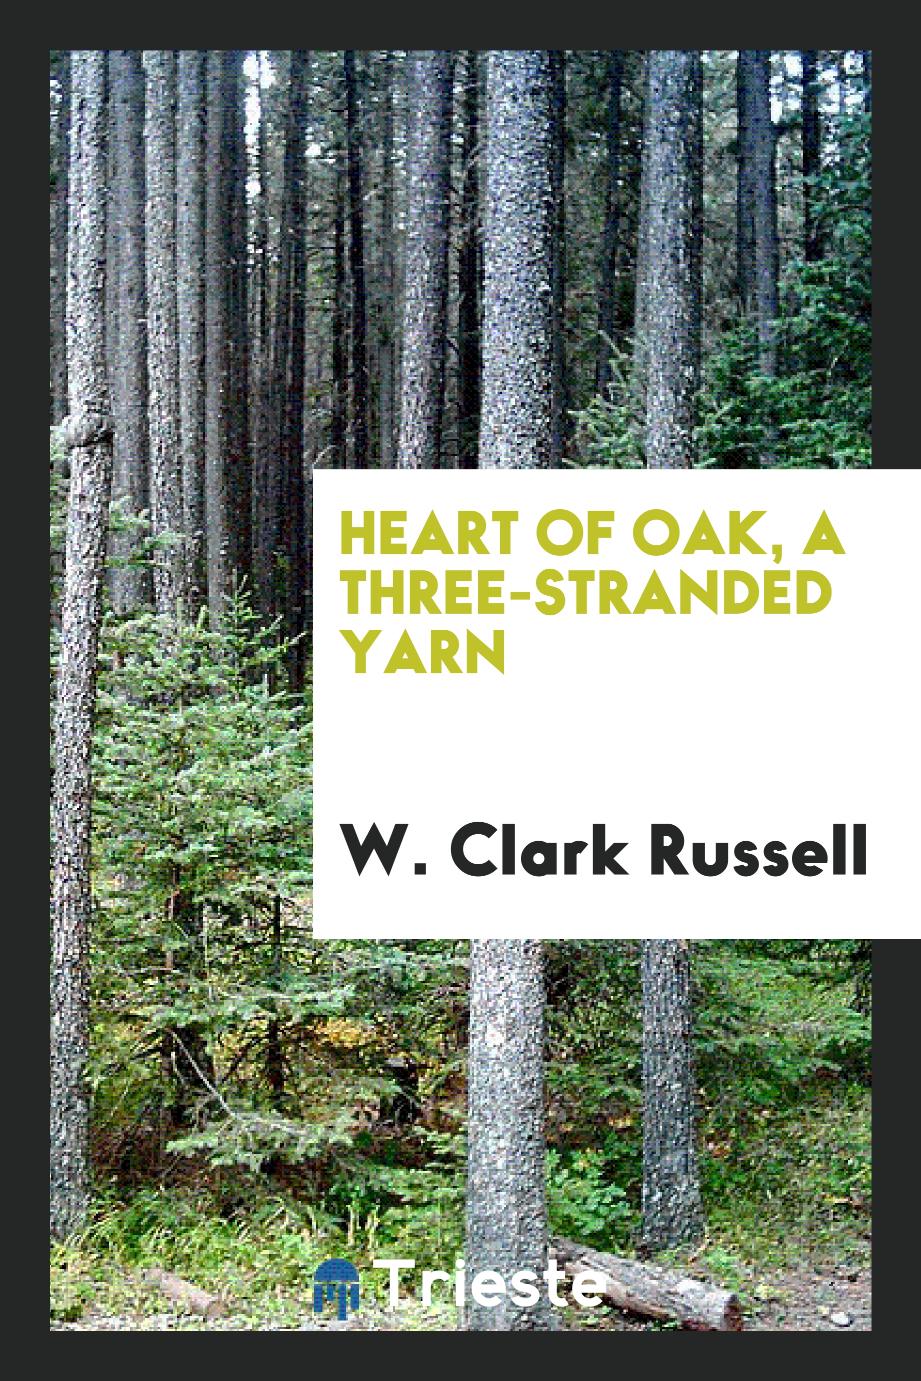 Heart of oak, a three-stranded yarn